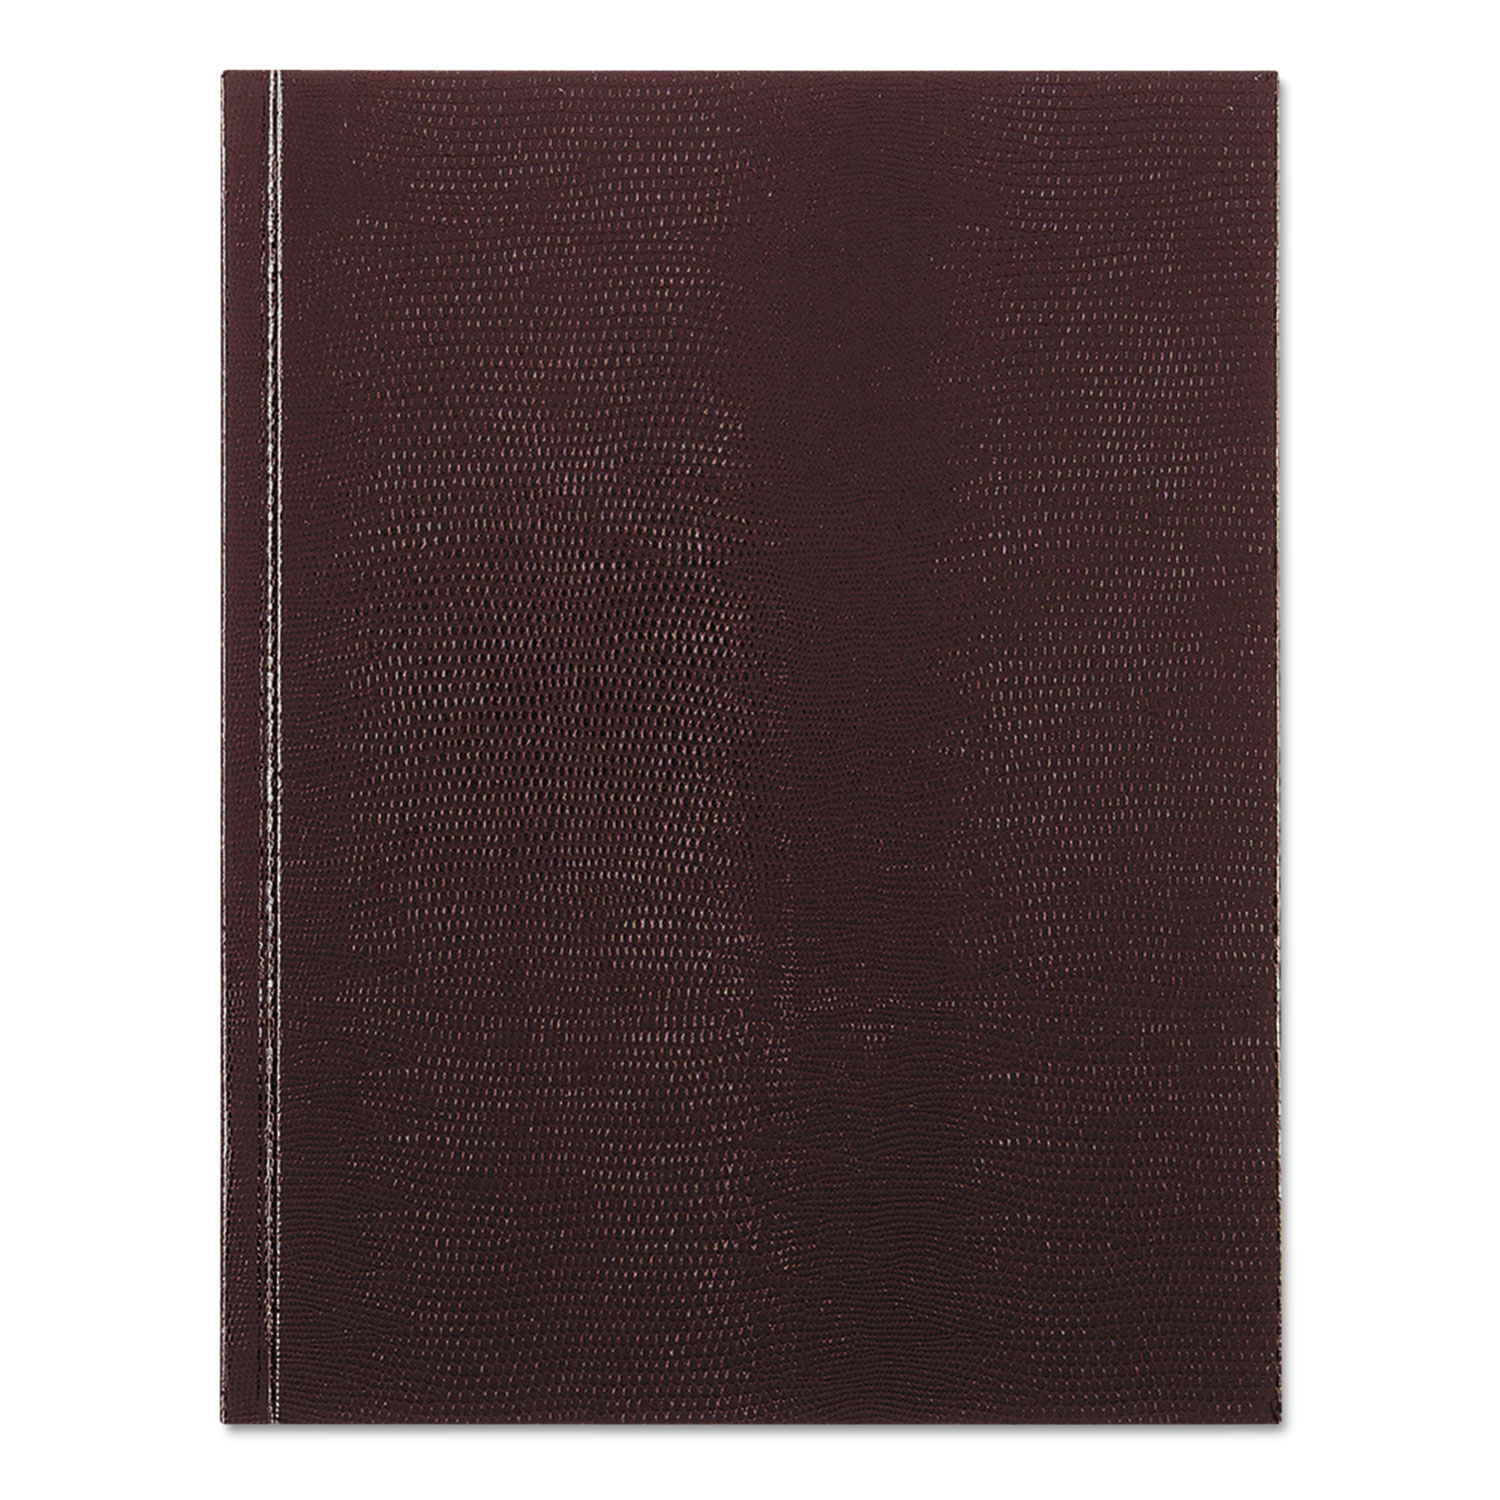  Blueline A7.BURG Executive Notebook, Medium/College Rule, Burgundy Cover, 9.25 x 7.25, 150 Sheets (REDA7BURG) 